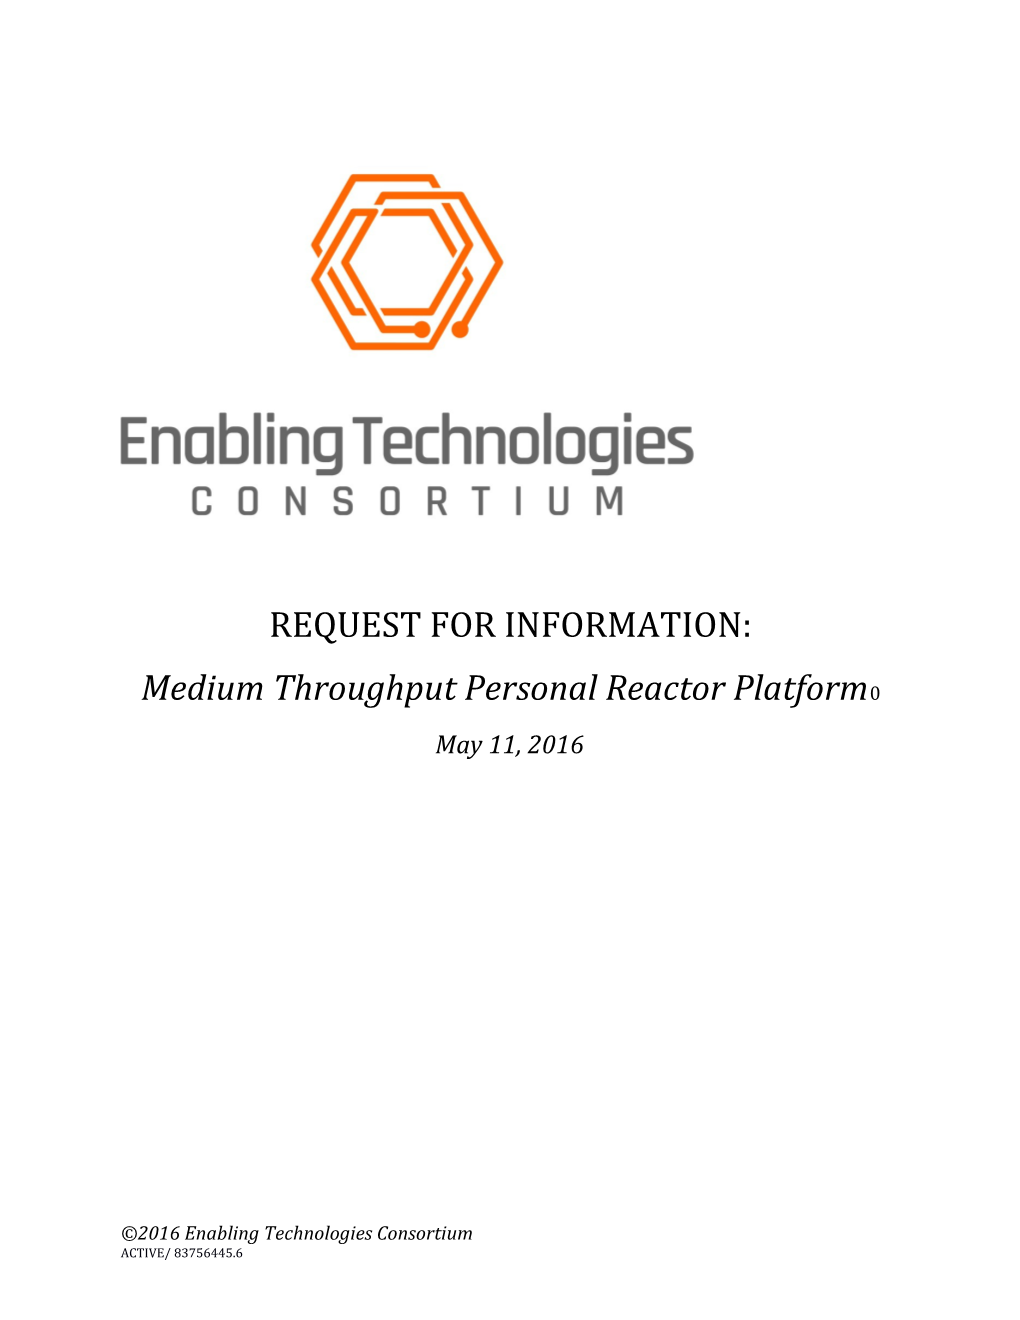 Enabling Technologies Consortium Medium Throughput Personal Reactor Platform - RFI